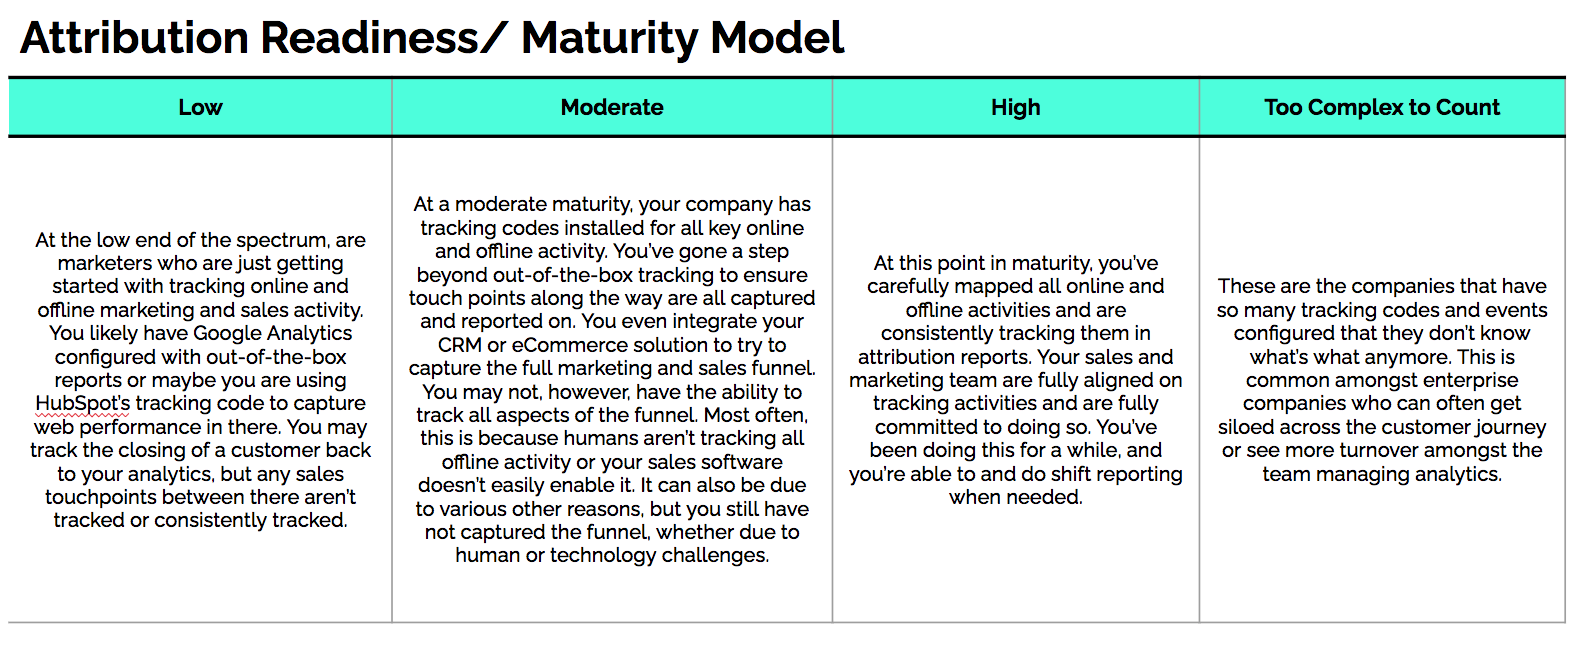 Attribution Readiness/Maturity Model